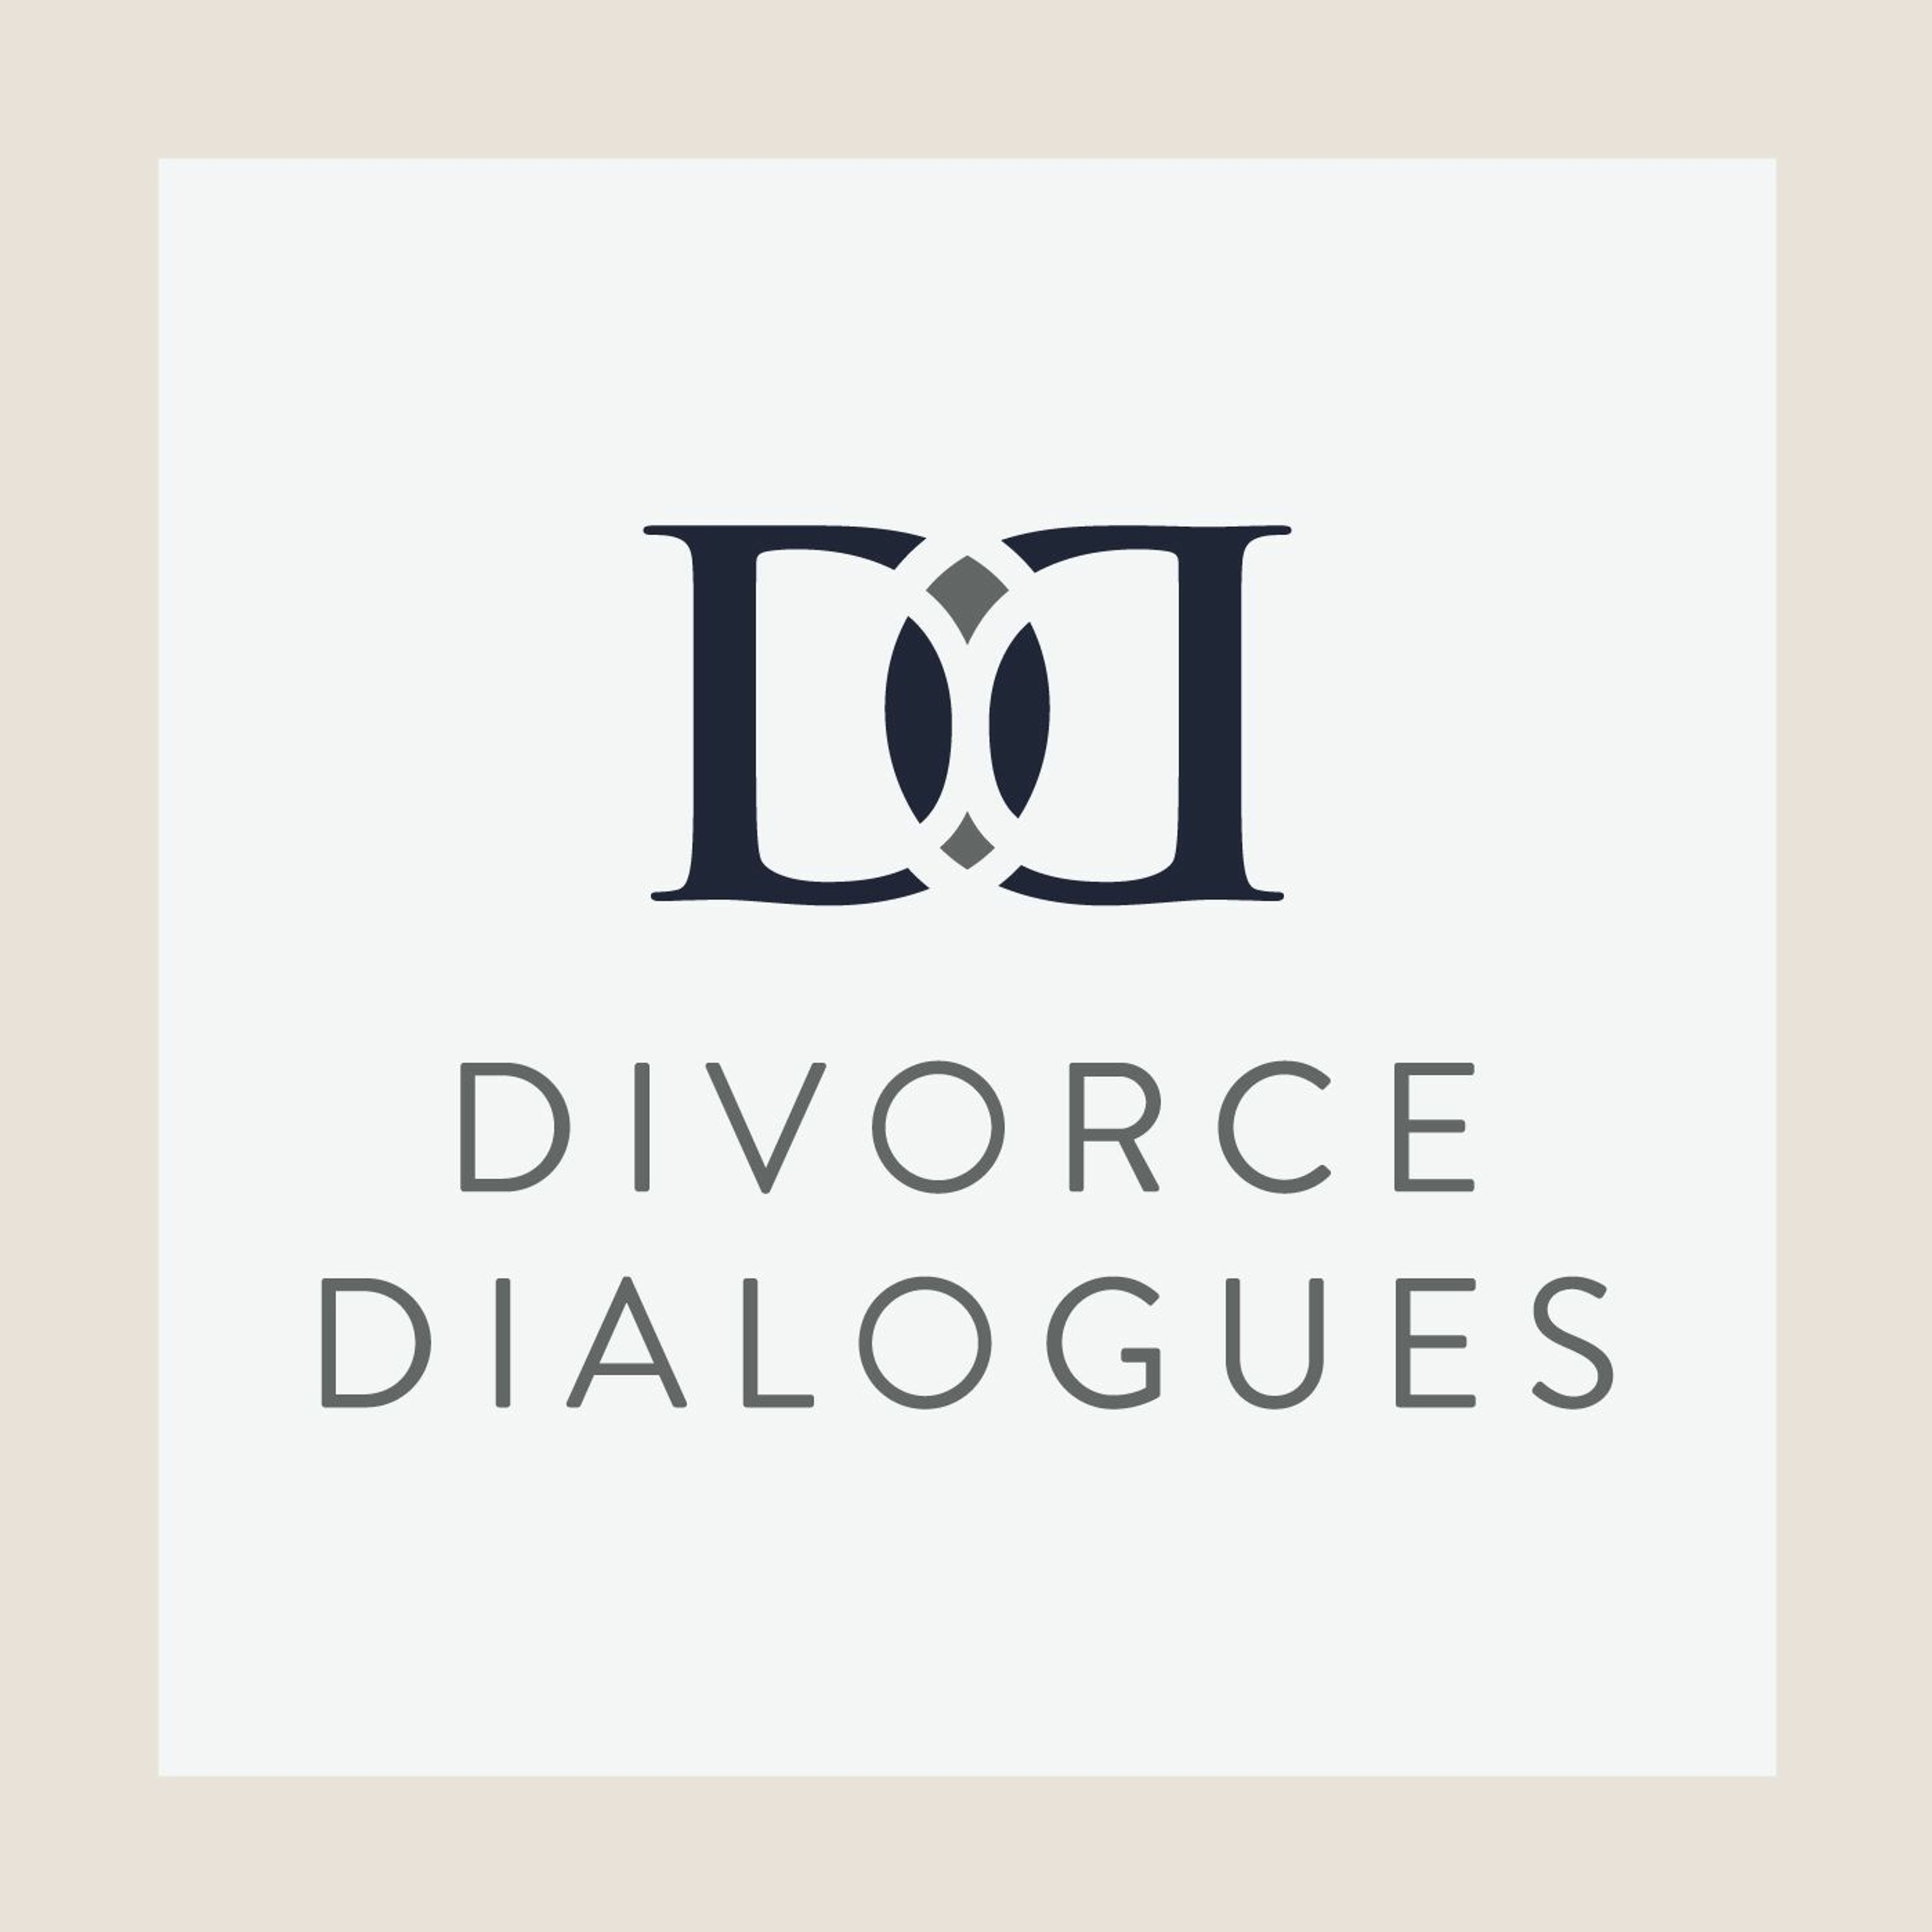 Divorce Dialogues - How to Transform Your Self-Esteem After a Divorce With Carol Davidson